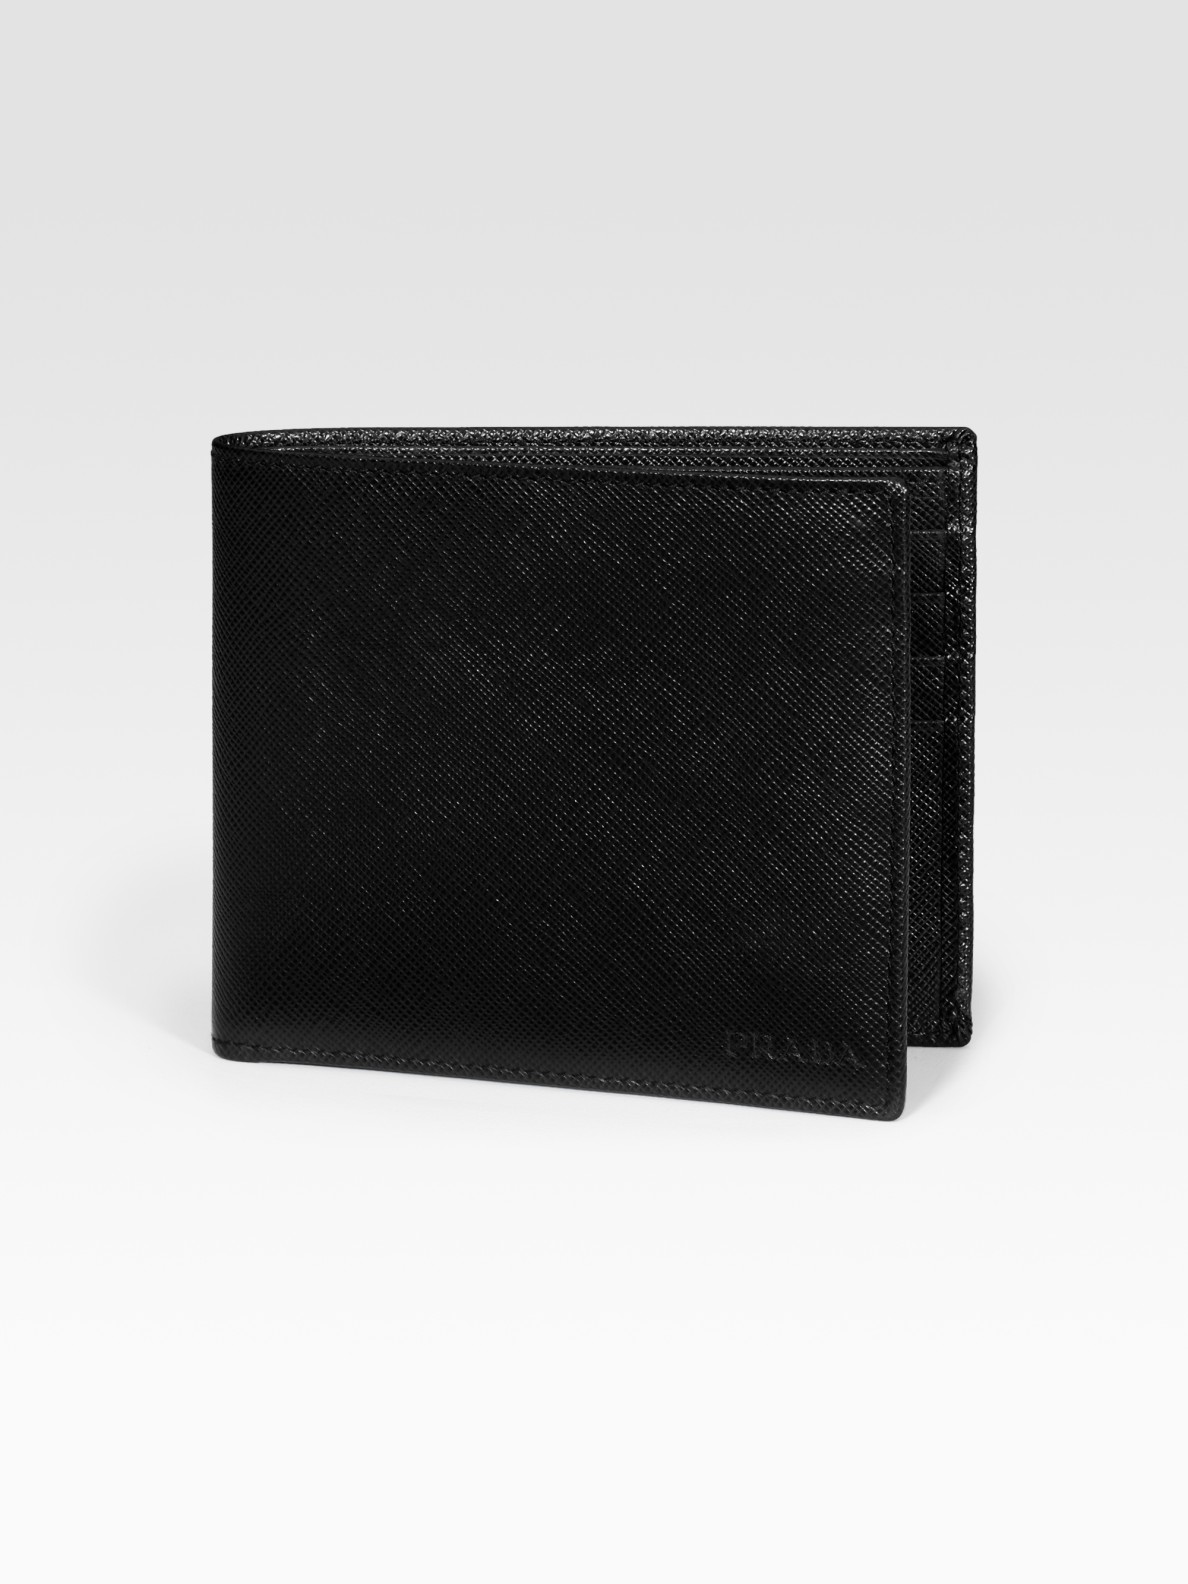 Prada Saffiano Leather Wallet in Black for Men | Lyst